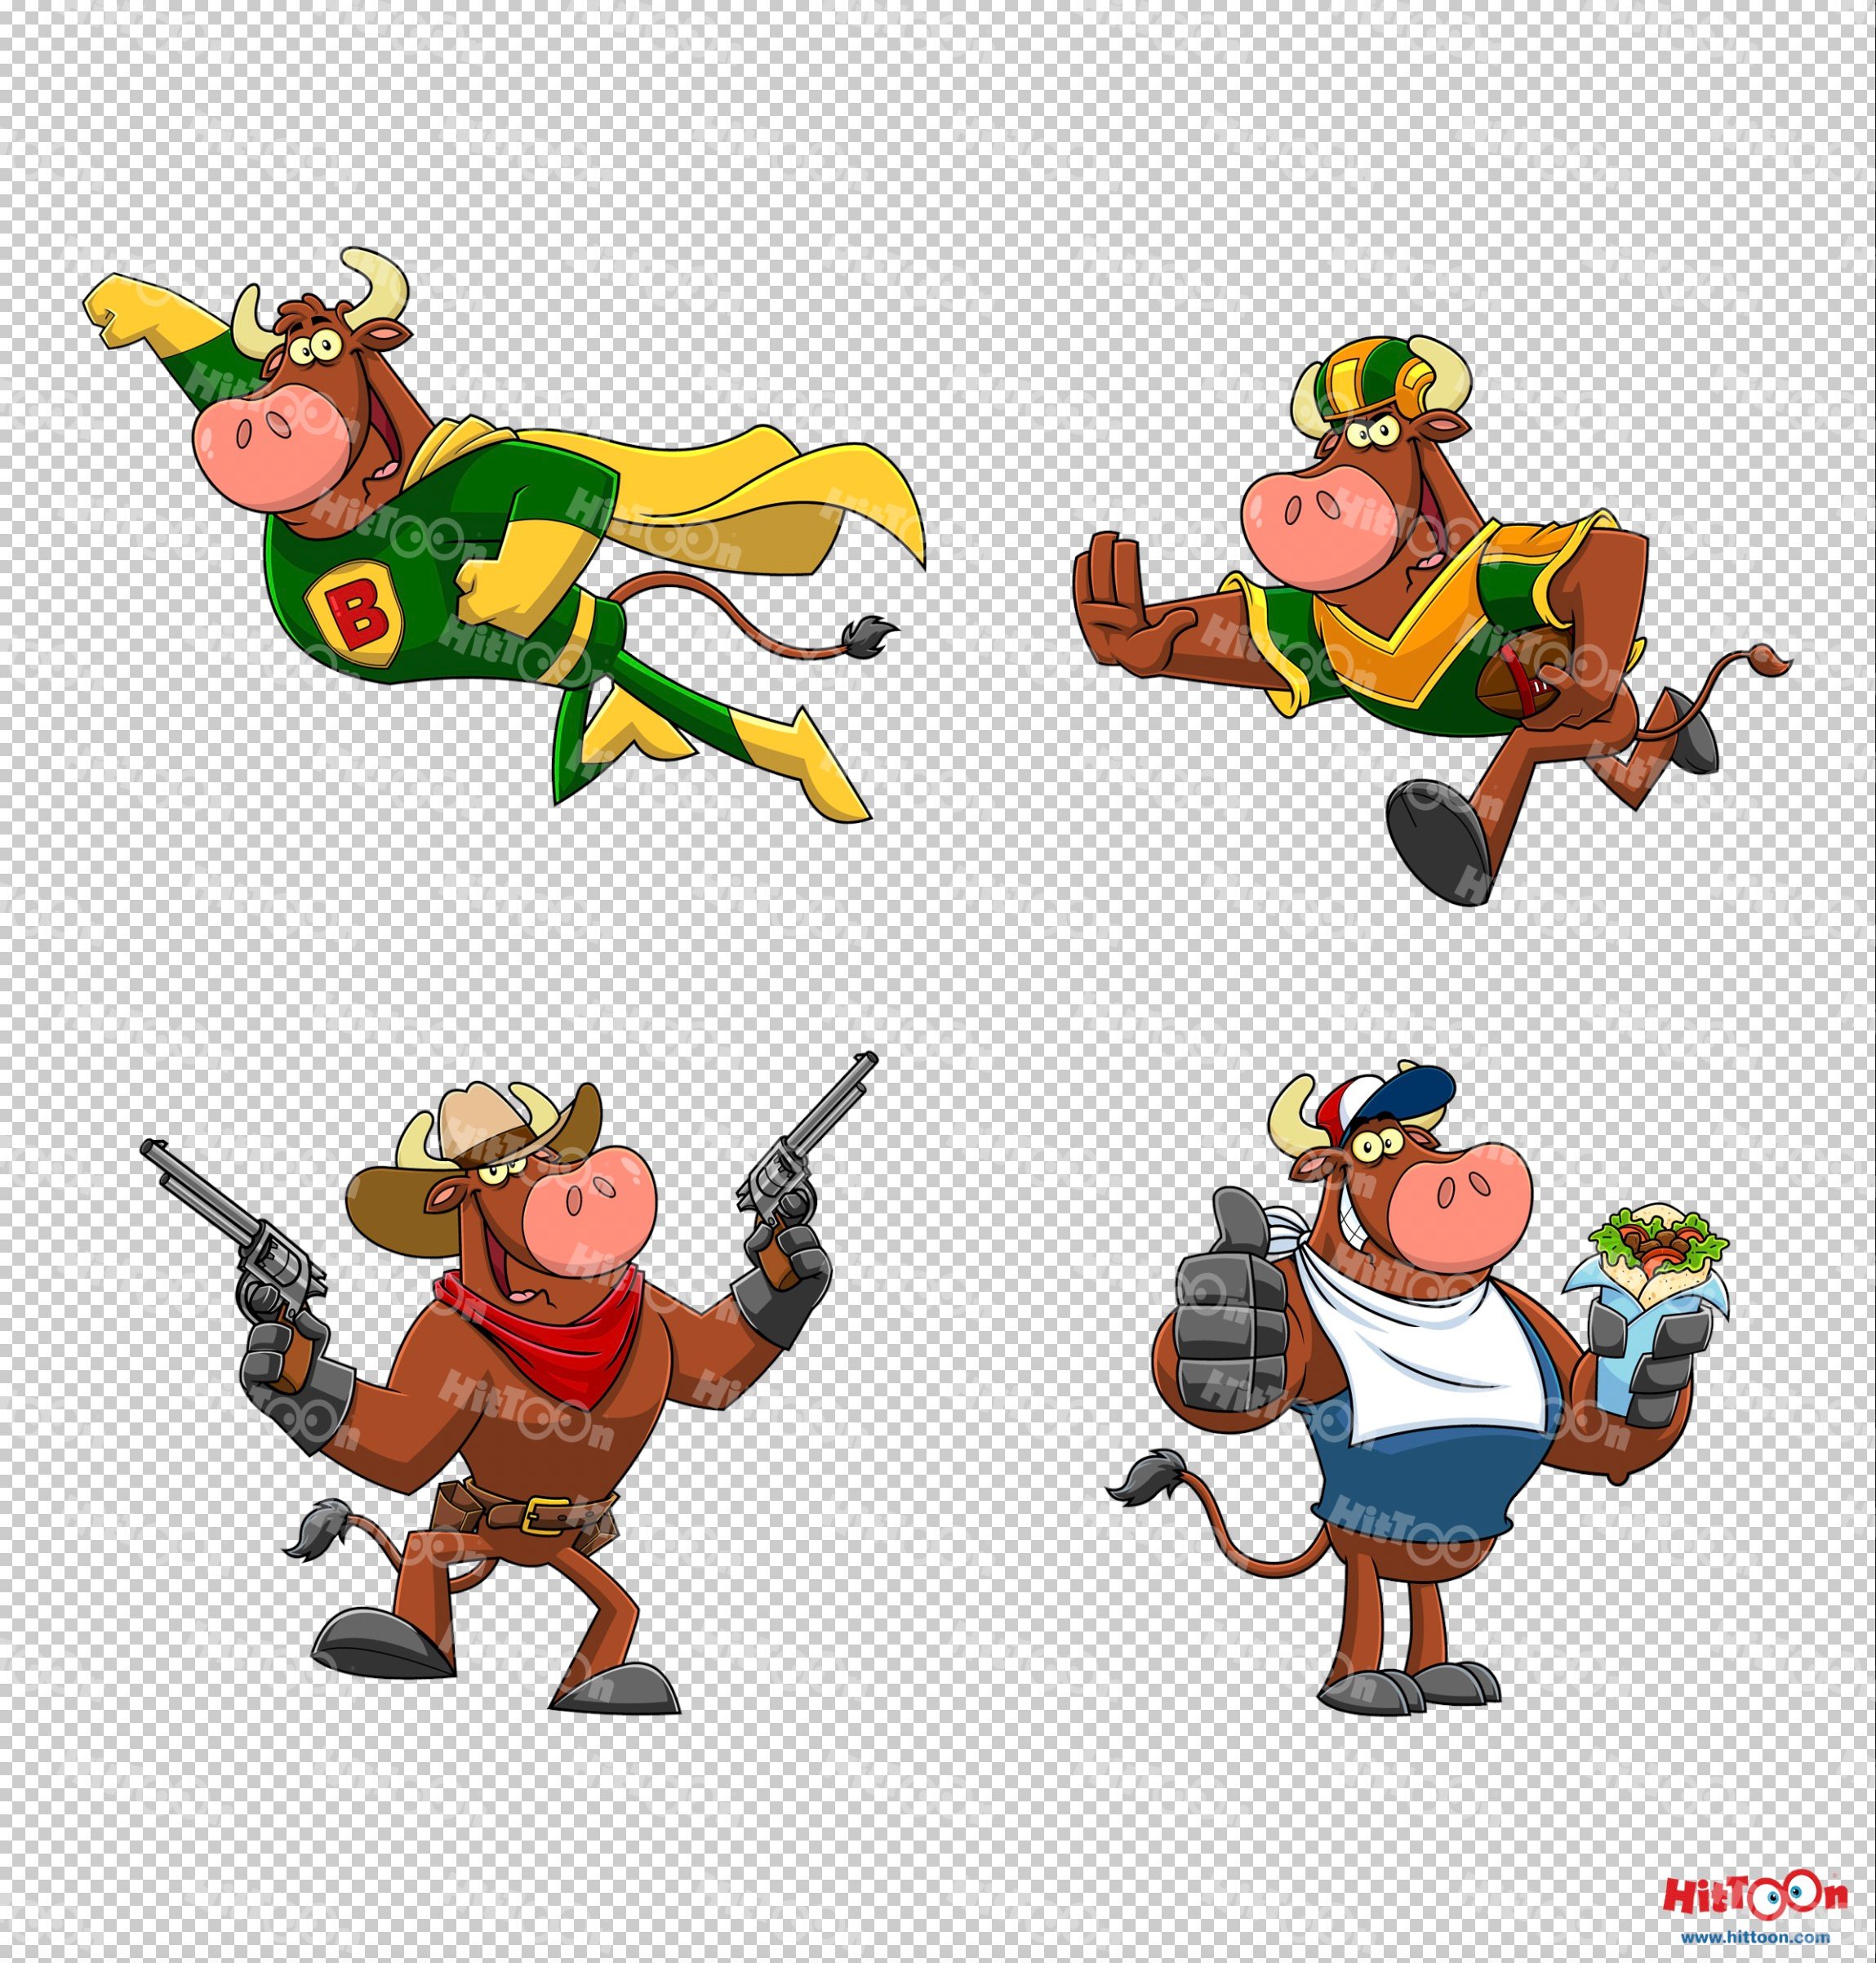 Bull Cartoon Mascot Character 2 preview image.